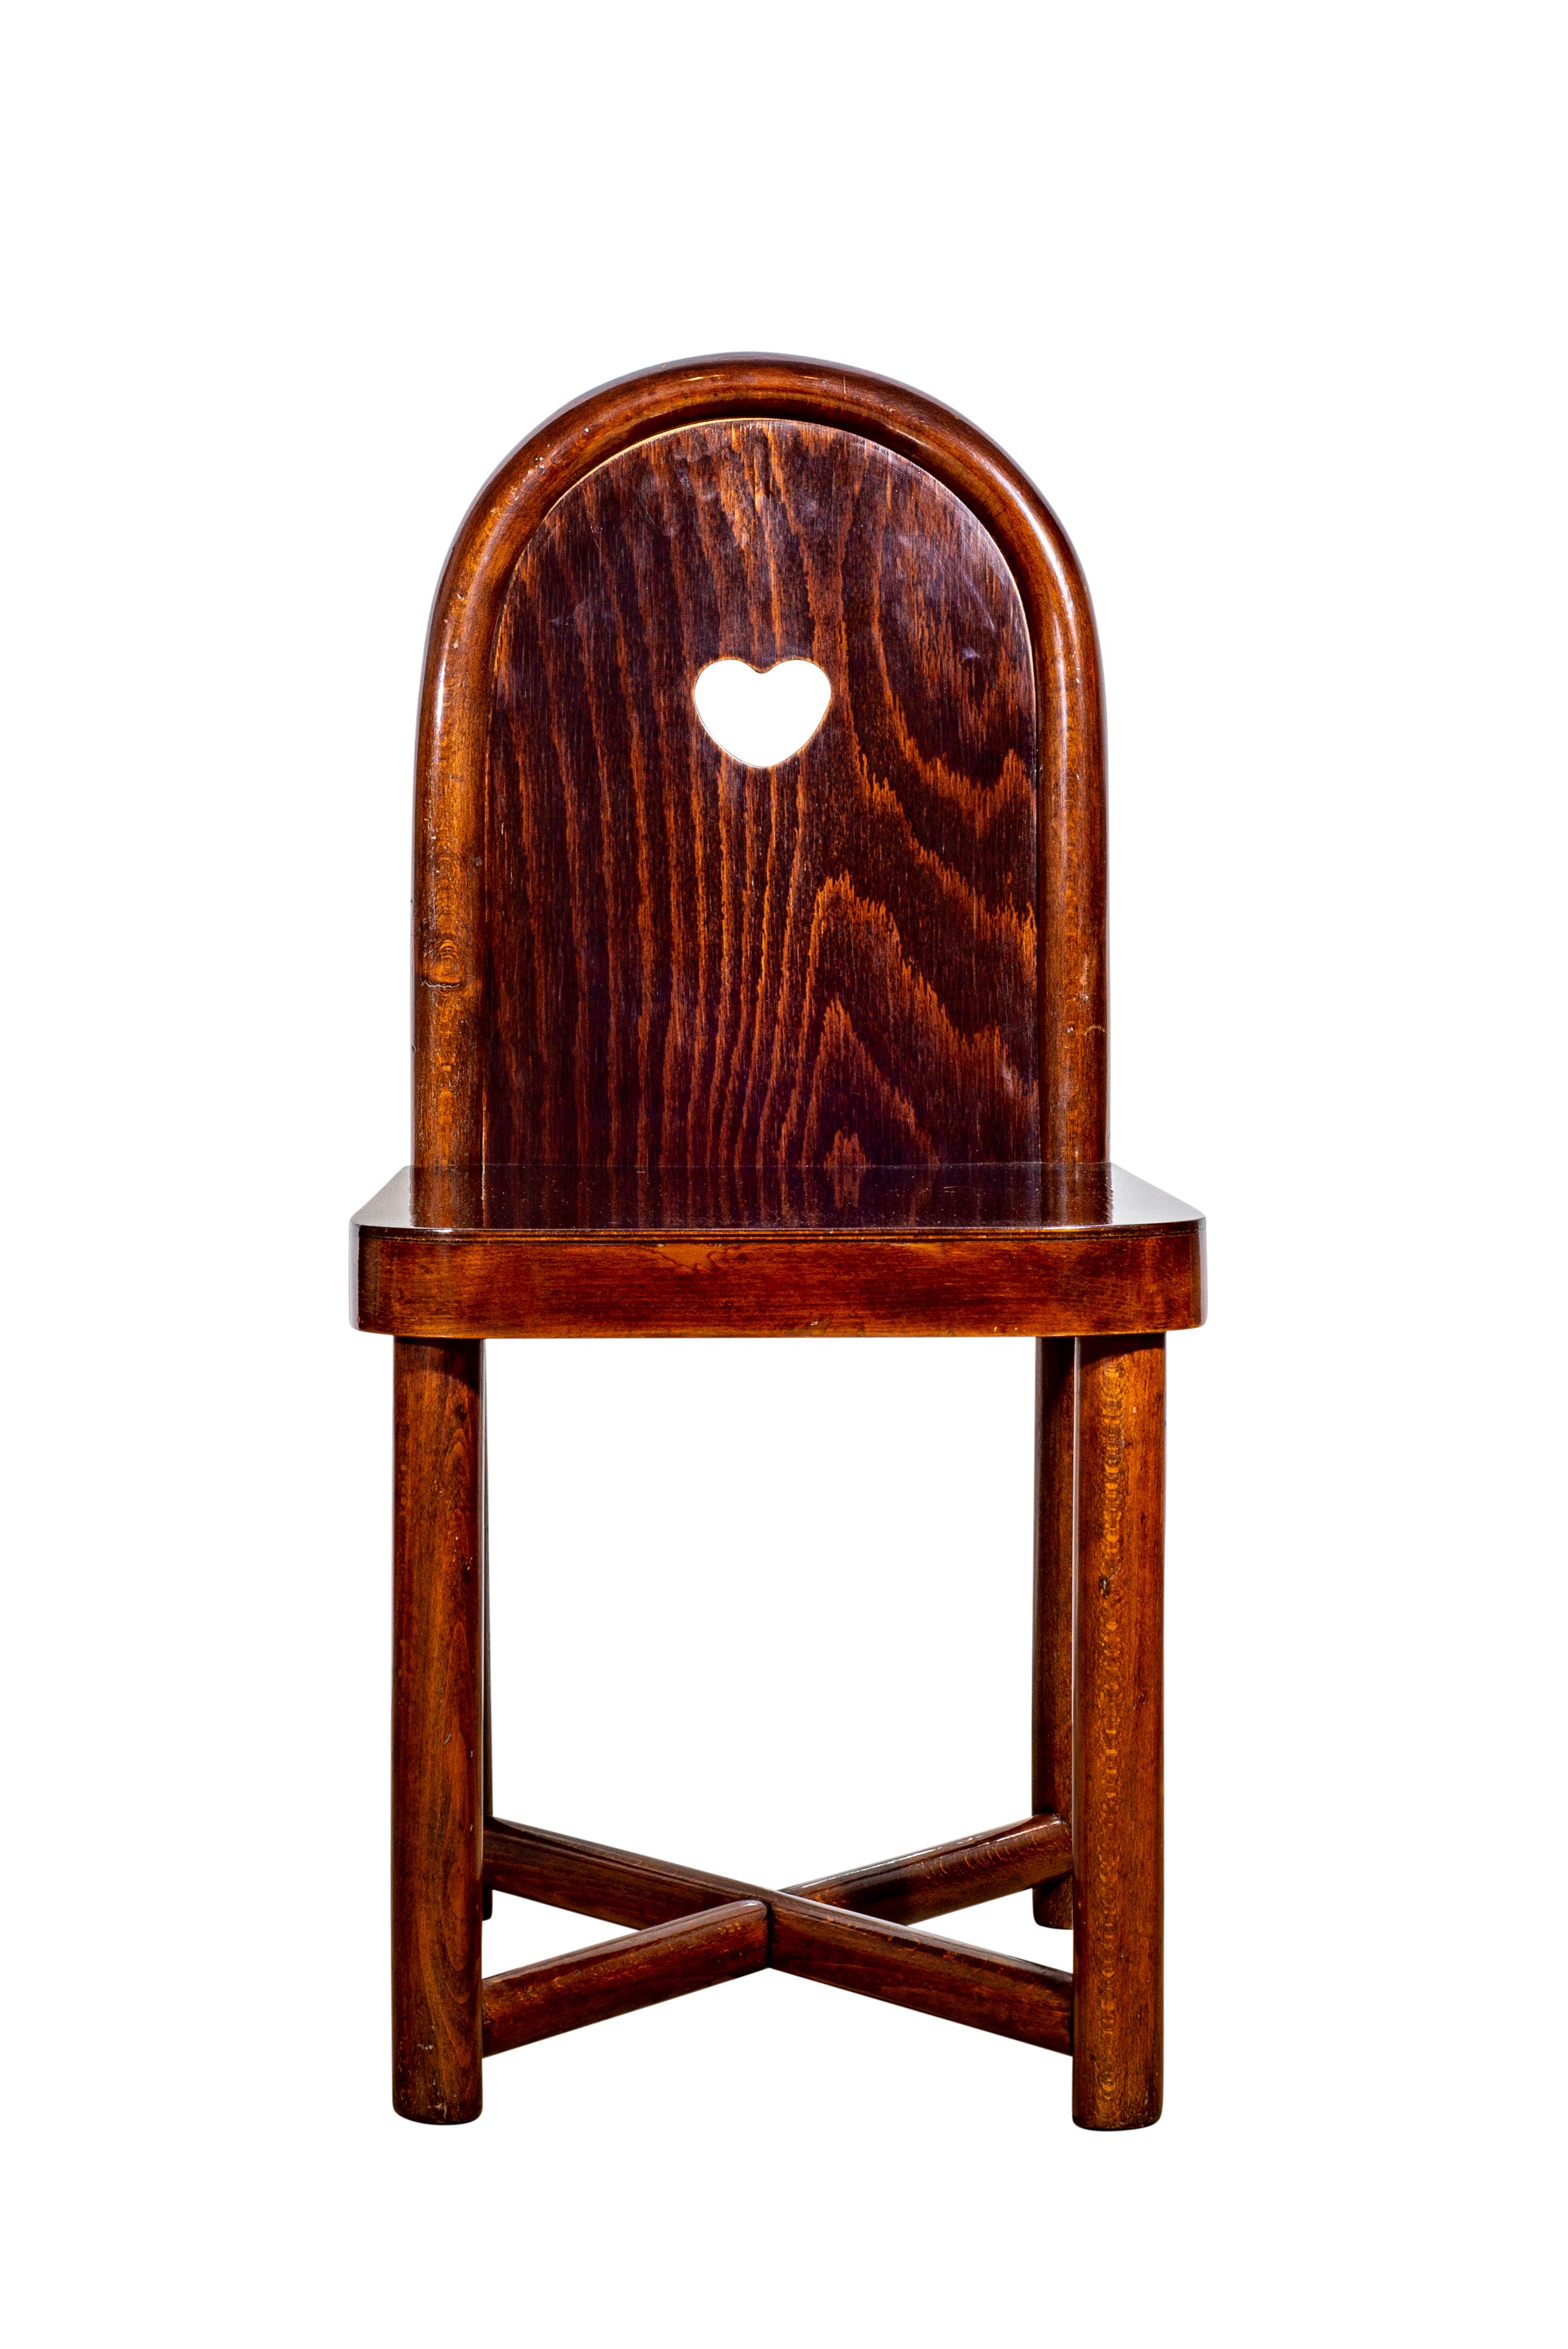 Austrian Jugendstil children's chair bent beechwood mahogany stained designed by Otto Prutscher manufactured by Gebrüder Thonet

Otto Prutscher, trained carpenter and student at the Vienna Kunstgewerbeschule under Josef Hoffmann, was an important